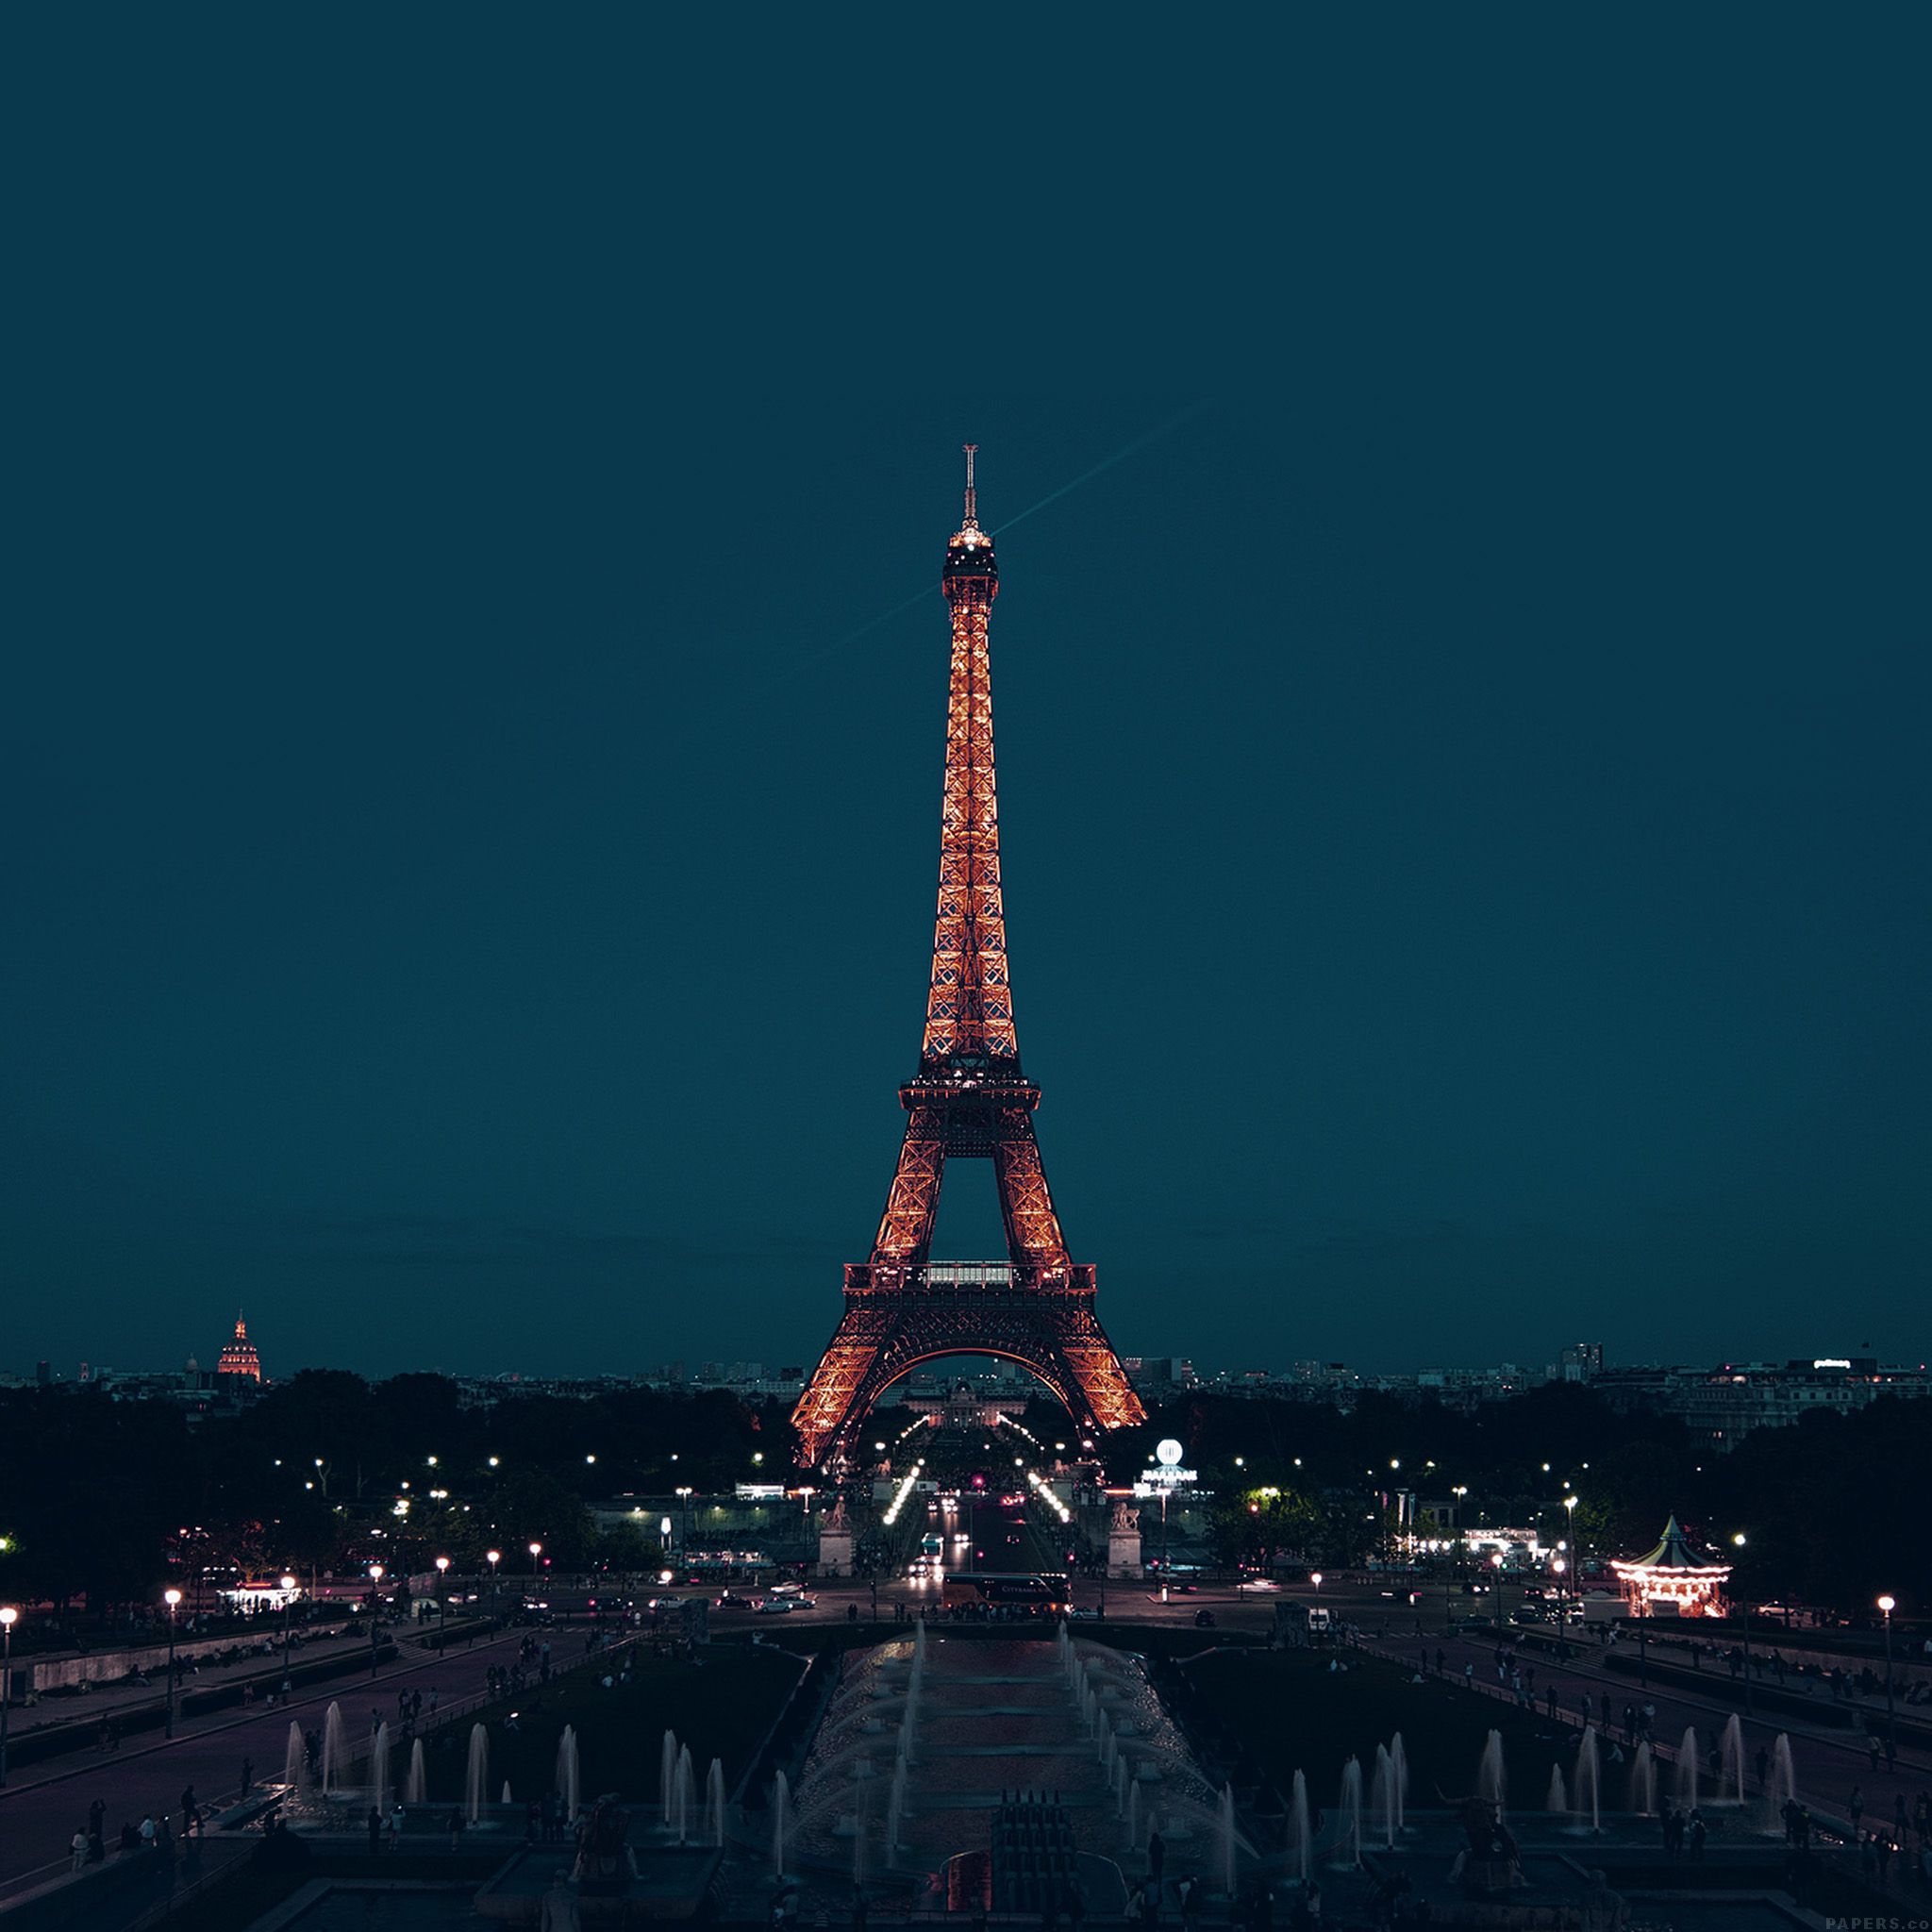 Eiffel tower at night, the most famous landmark in Paris - Eiffel Tower, Paris